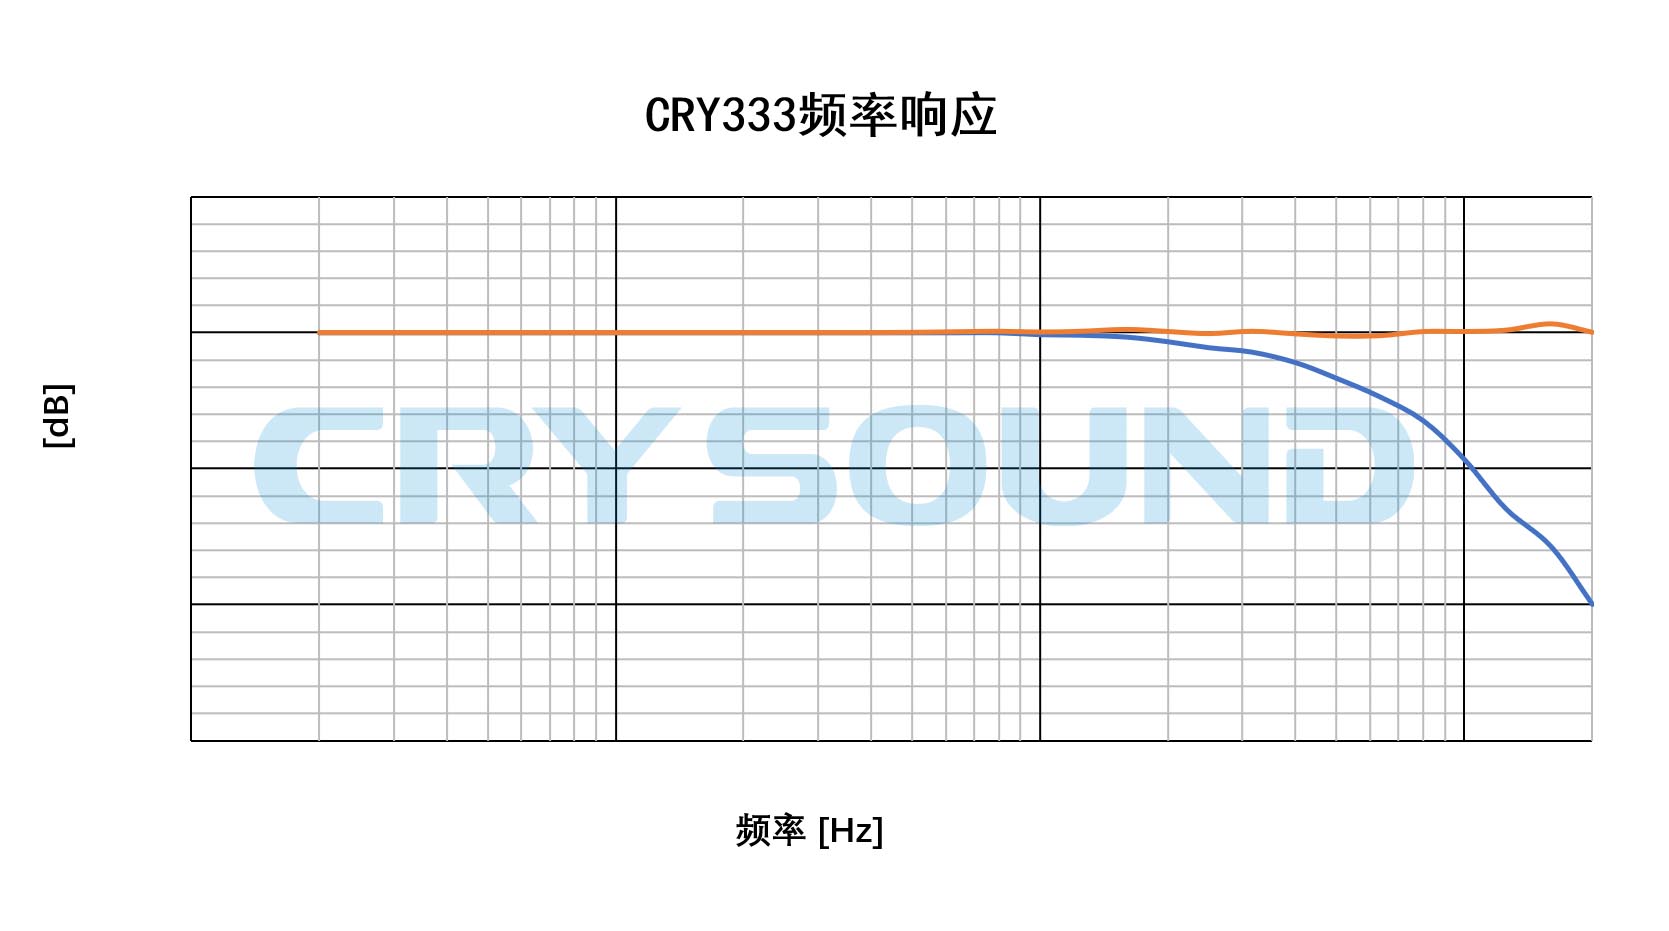 CRY333频率响应典型曲线